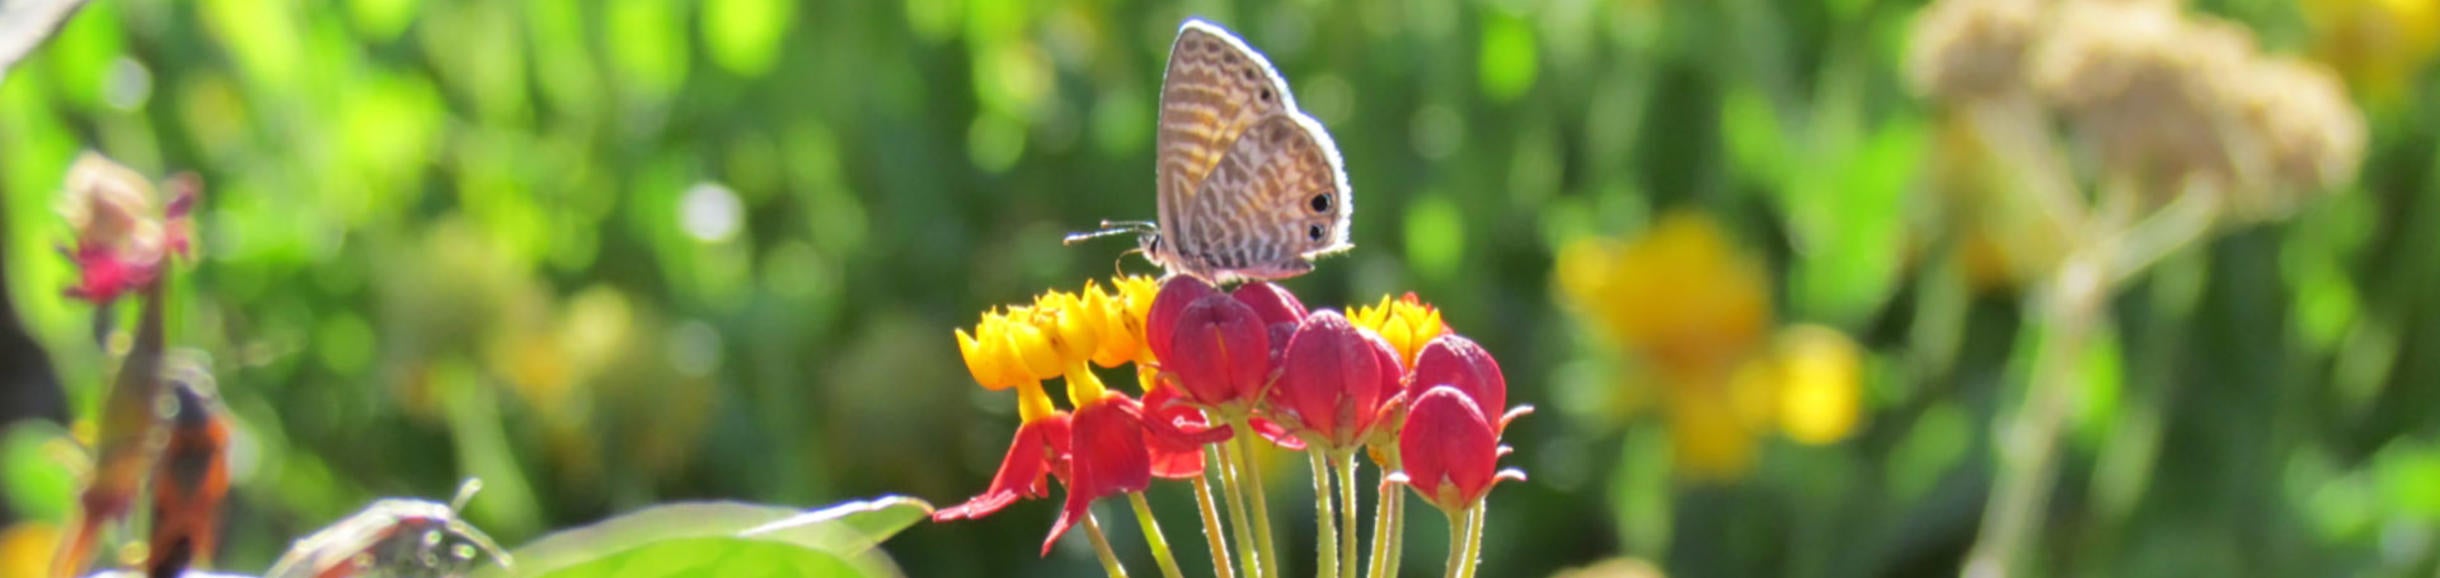 UCR Botanic Gardens, butterfly on flower